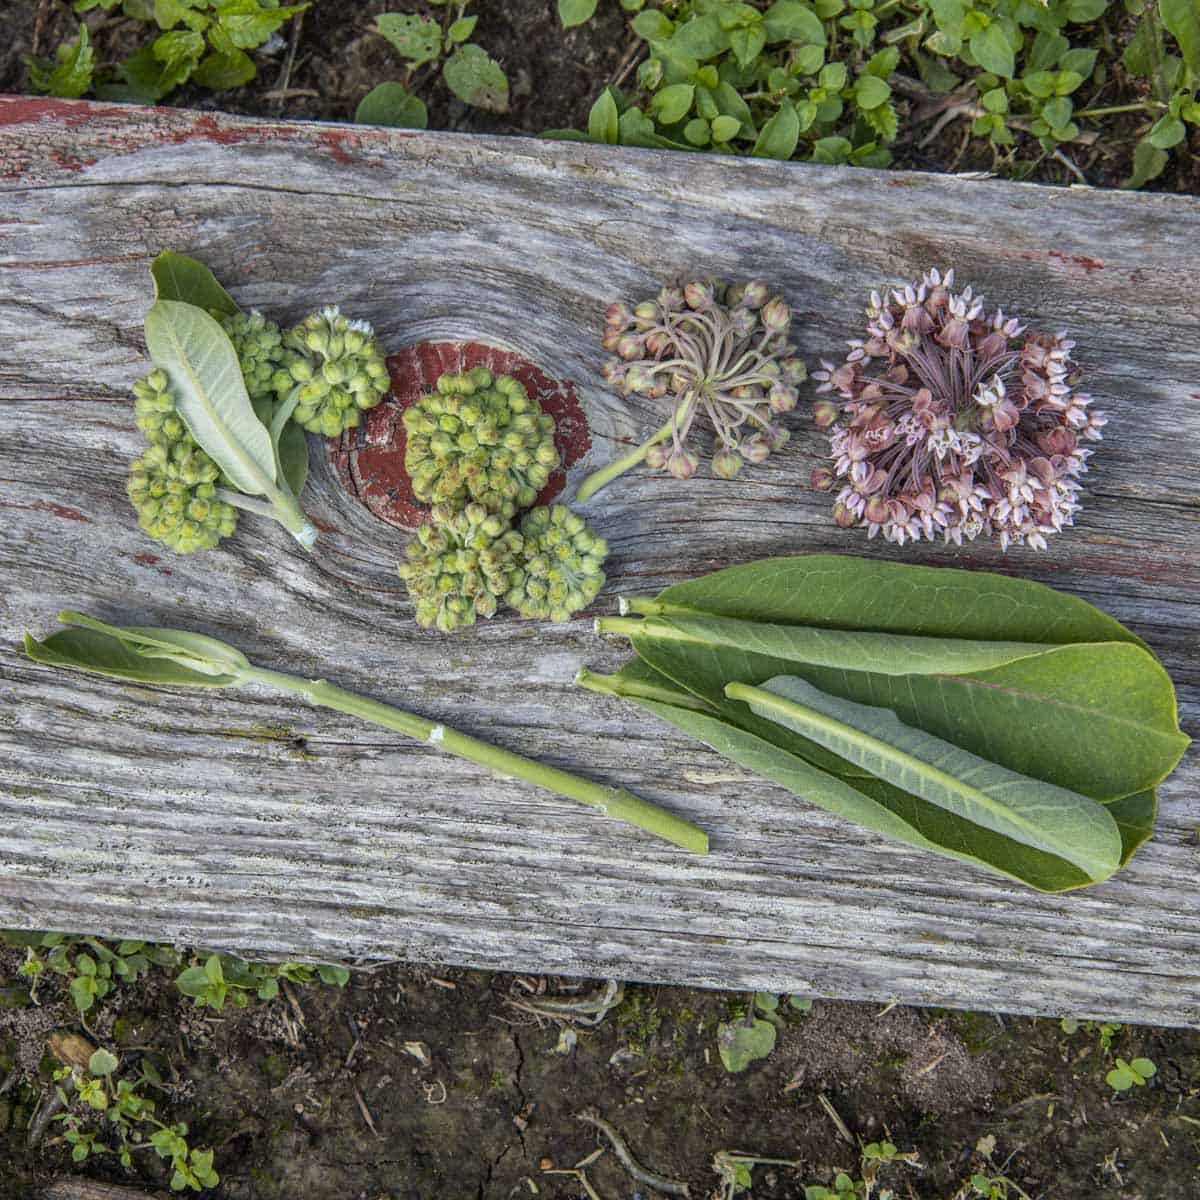 Various edible parts of milkweed: shoots, flowers, unripe flowers, mature unripe flowers, leaves